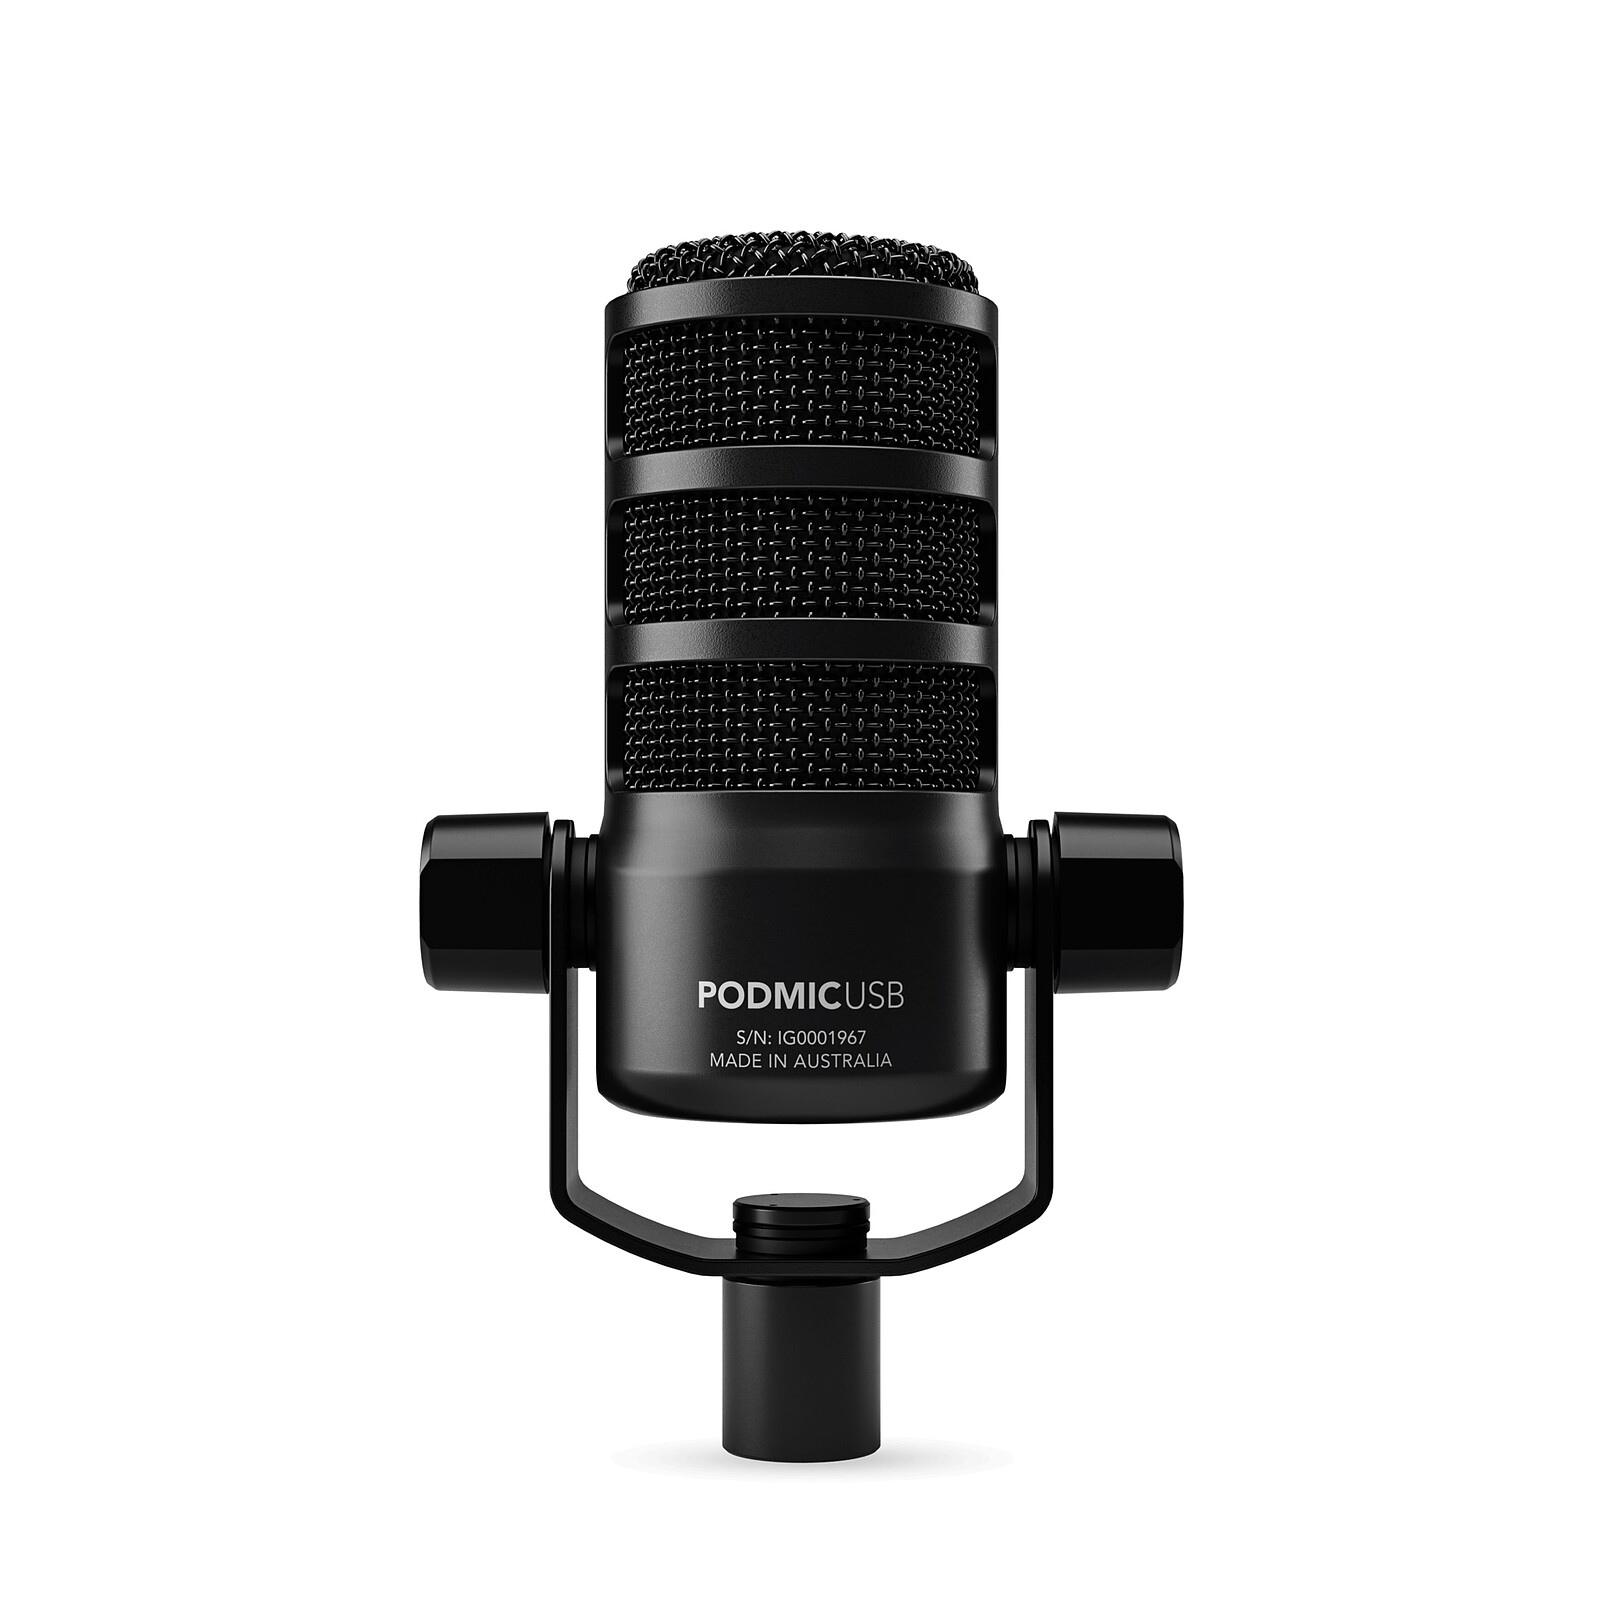 RODE PodMic - Microphone - Garantie 3 ans LDLC